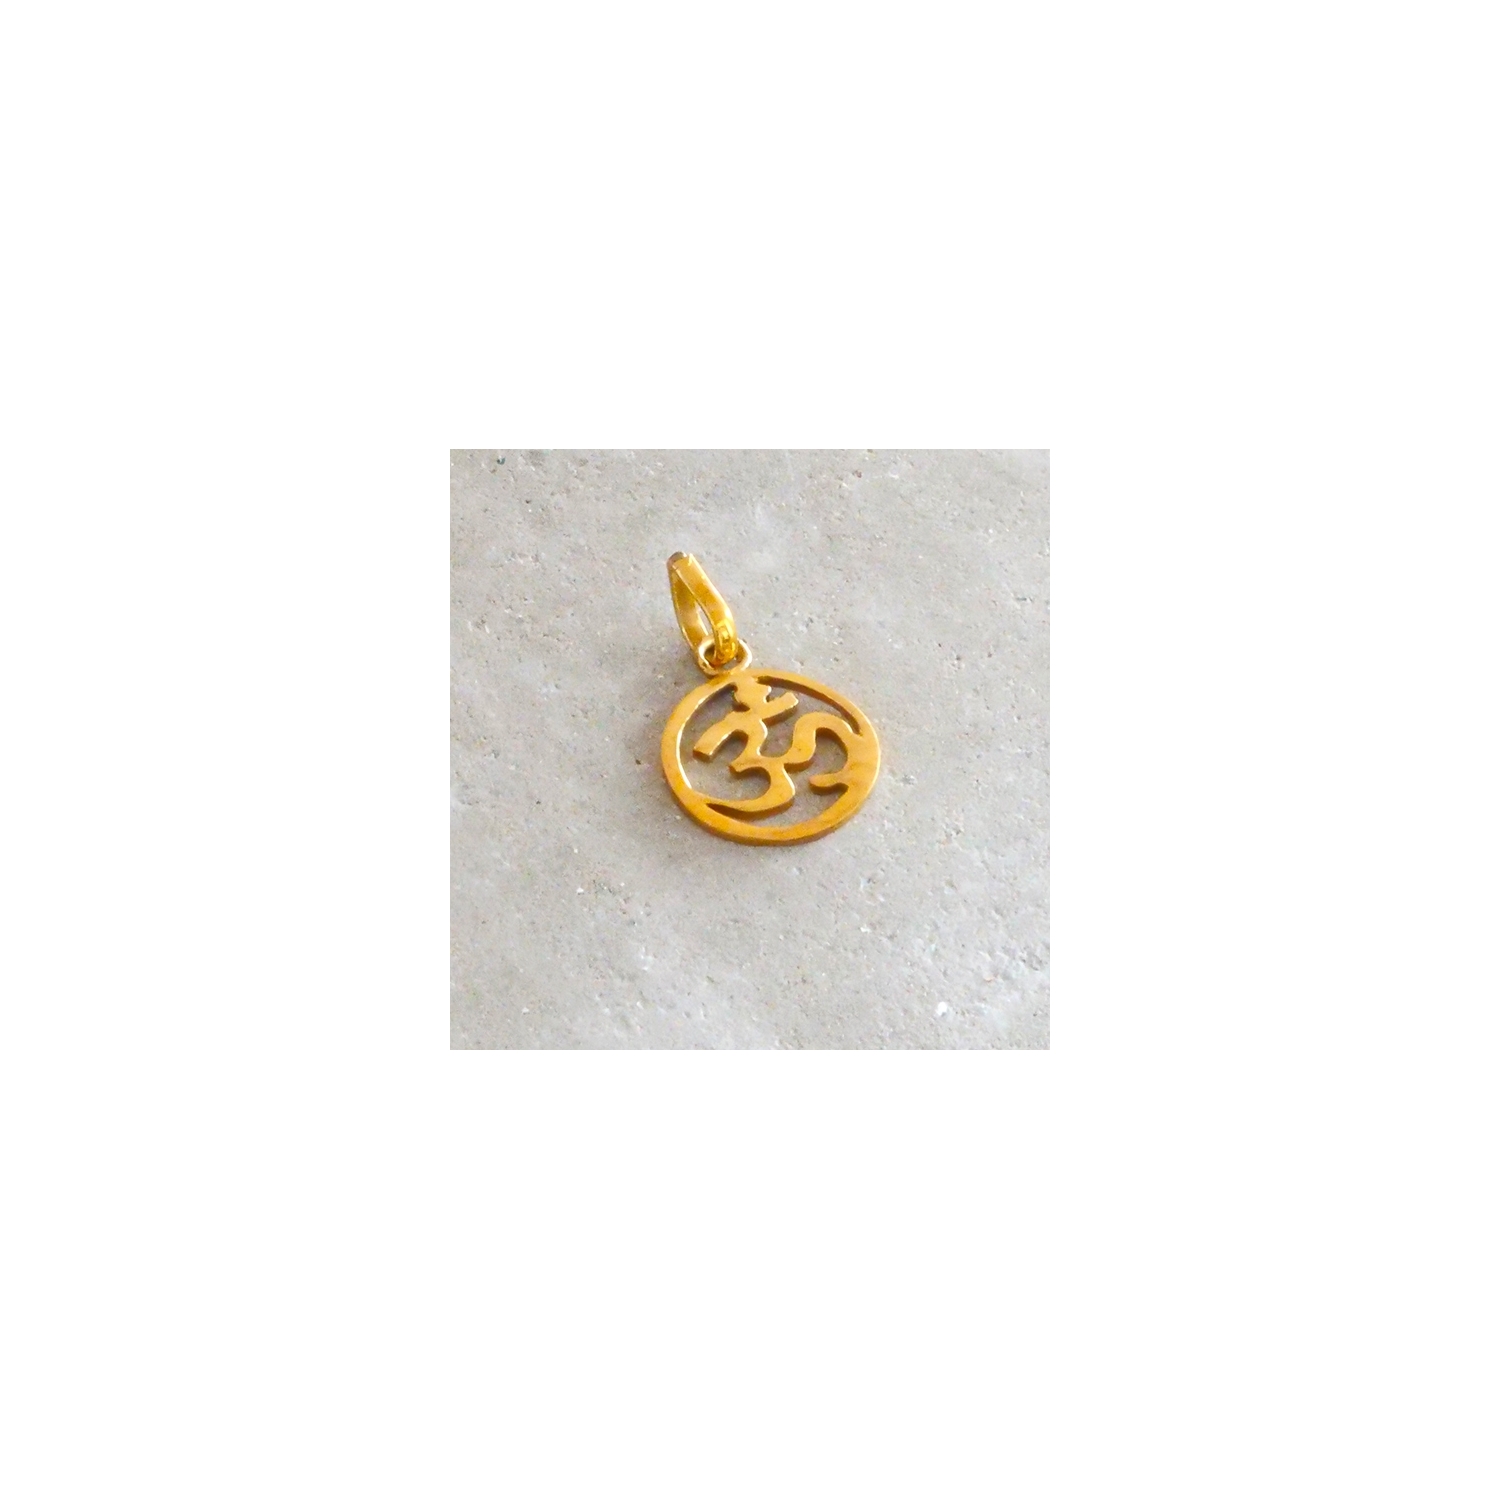 OM symbol brass pendant